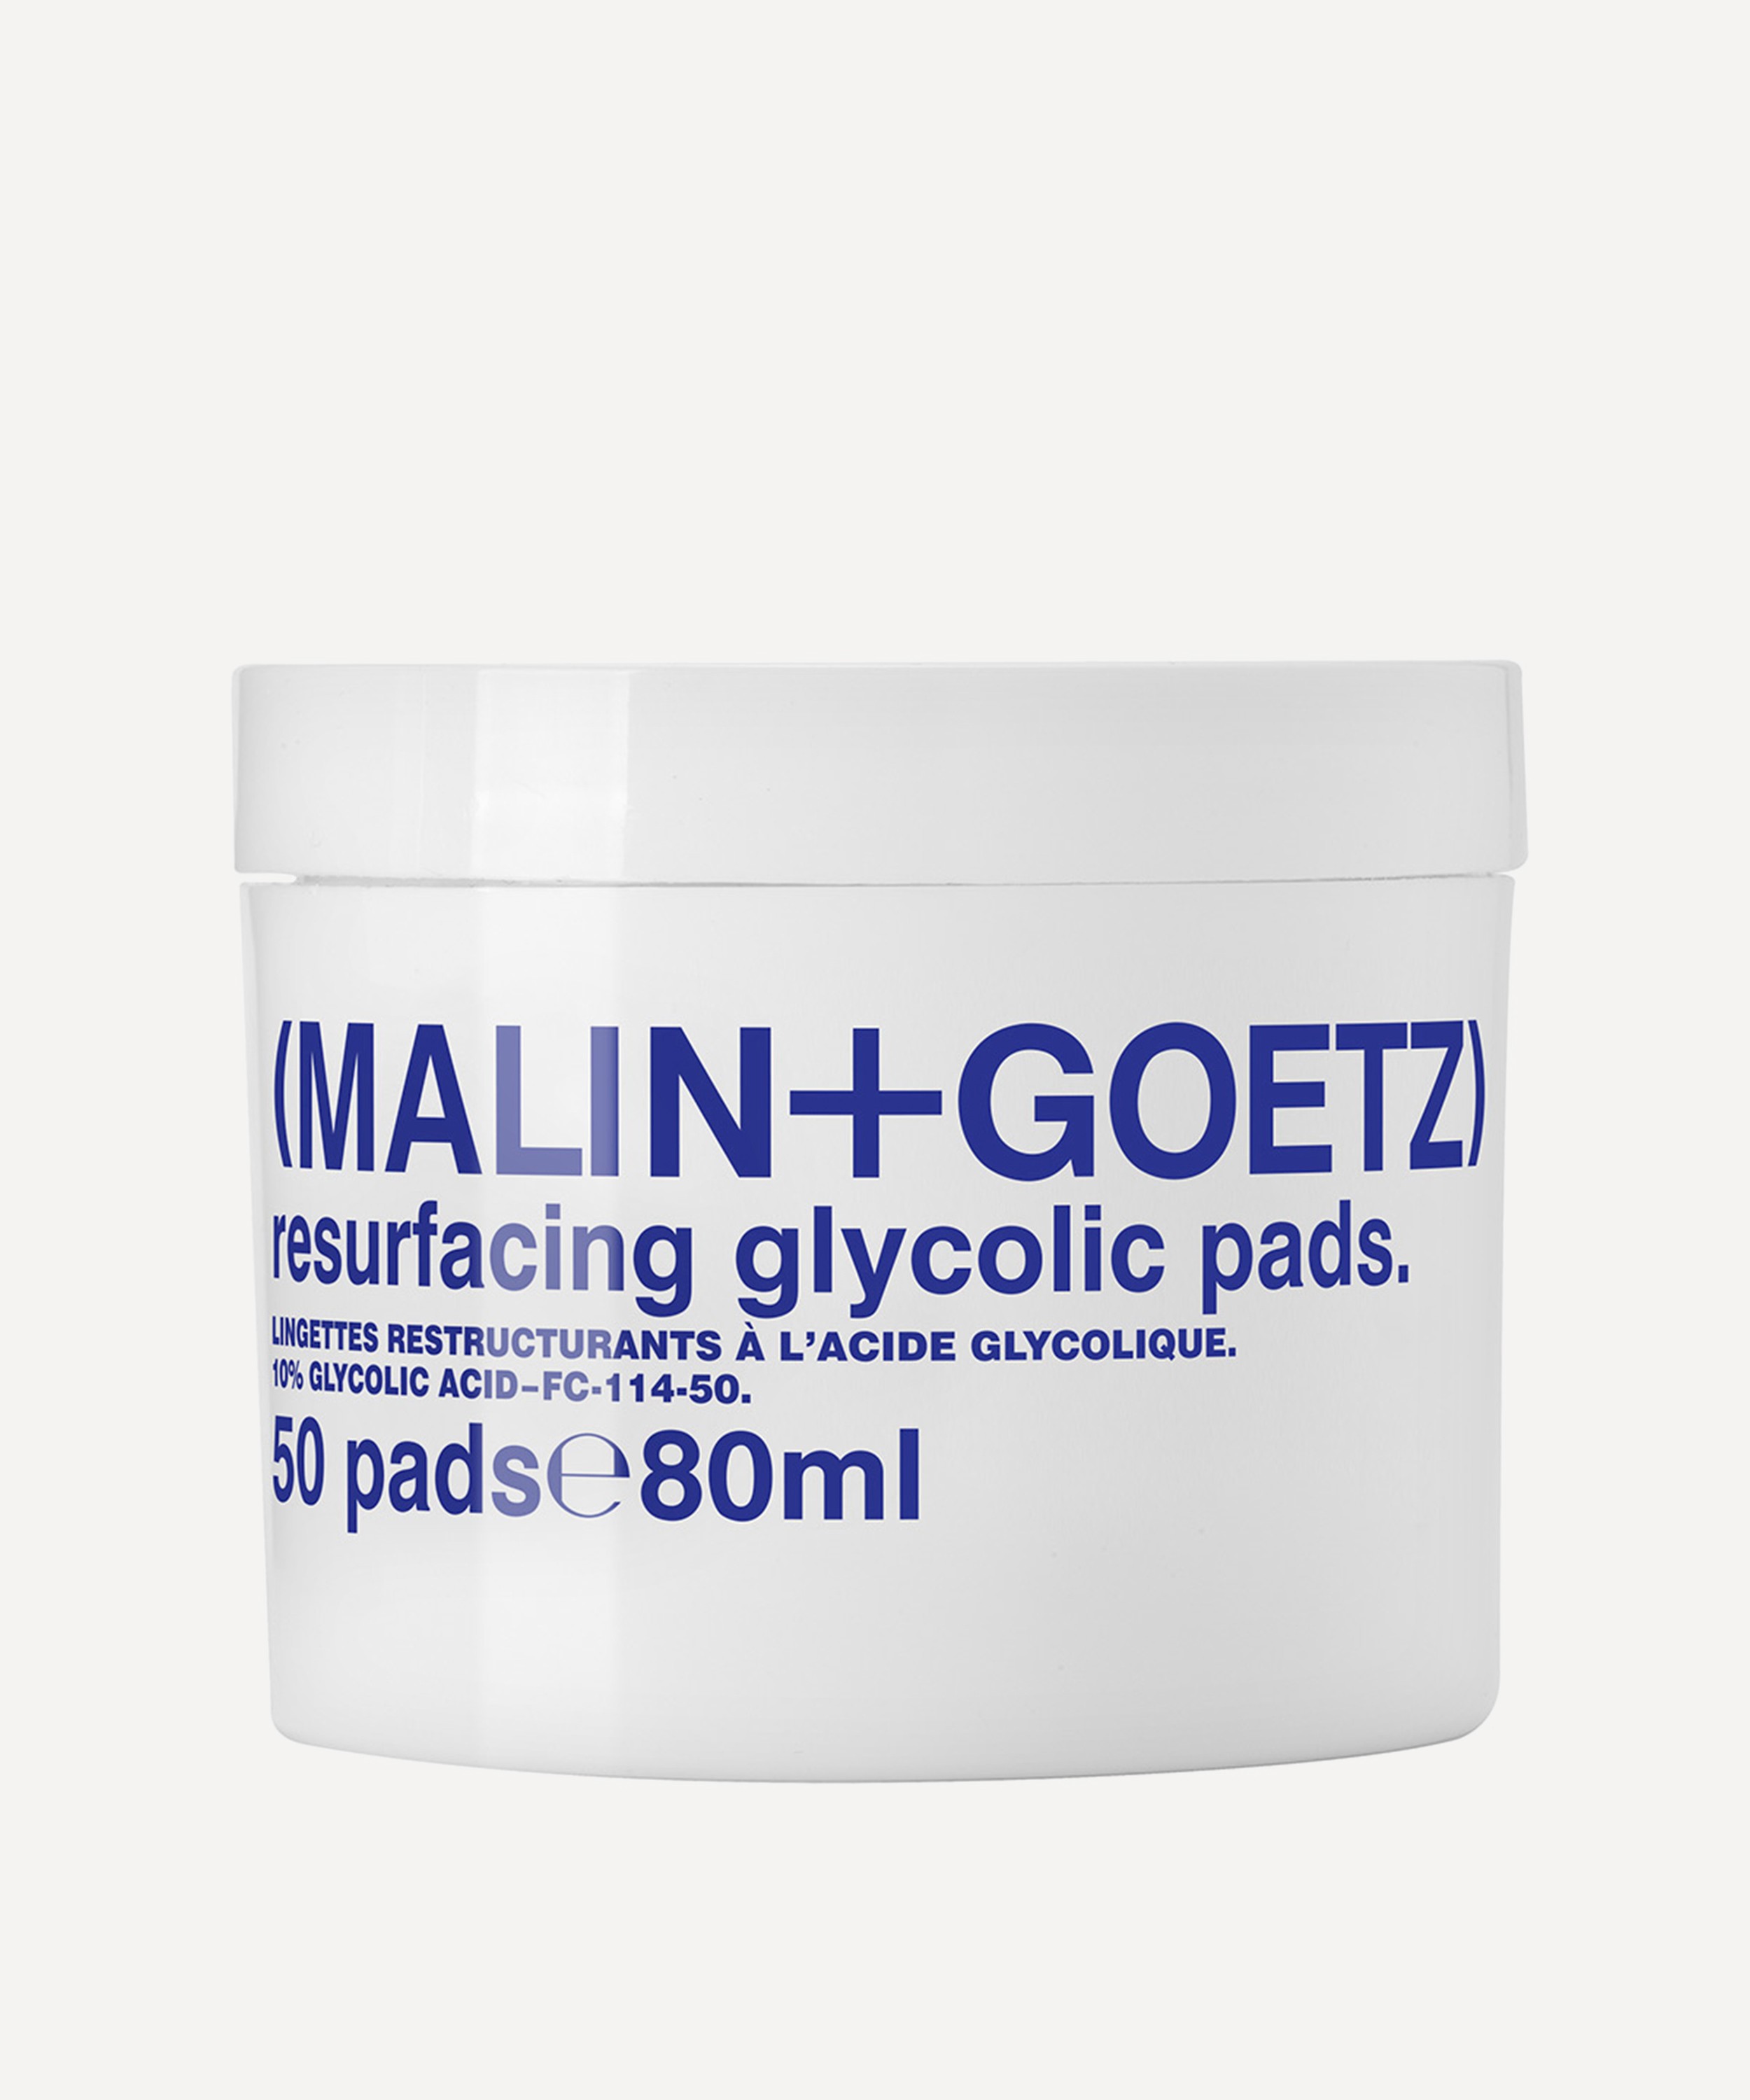 MALIN+GOETZ - Resurfacing Glycolic Pads 80ml image number 0